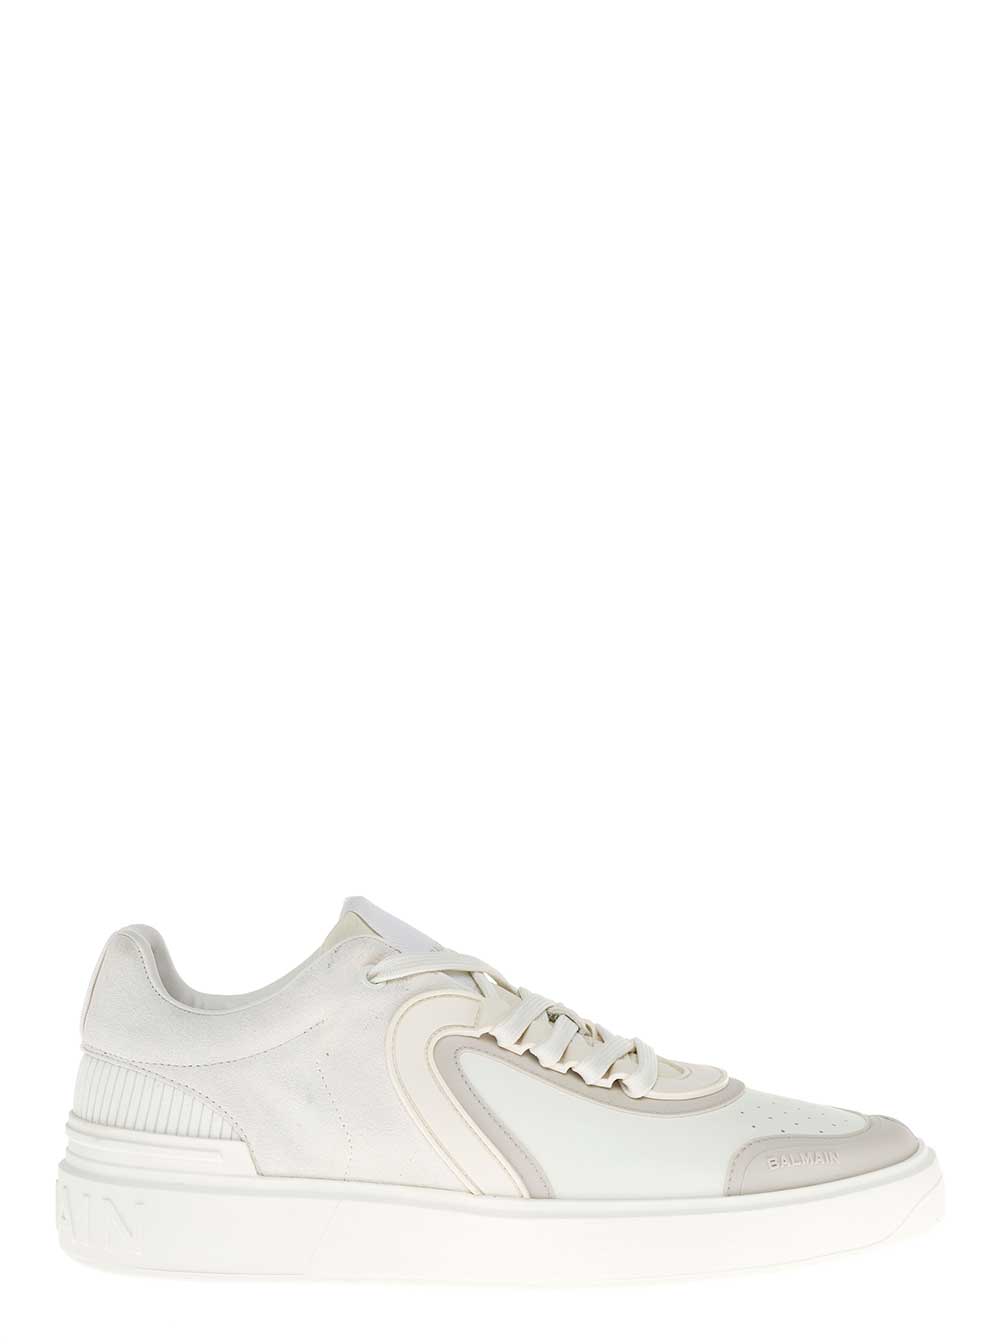 Balmain B Skate White Leather Low Sneakers